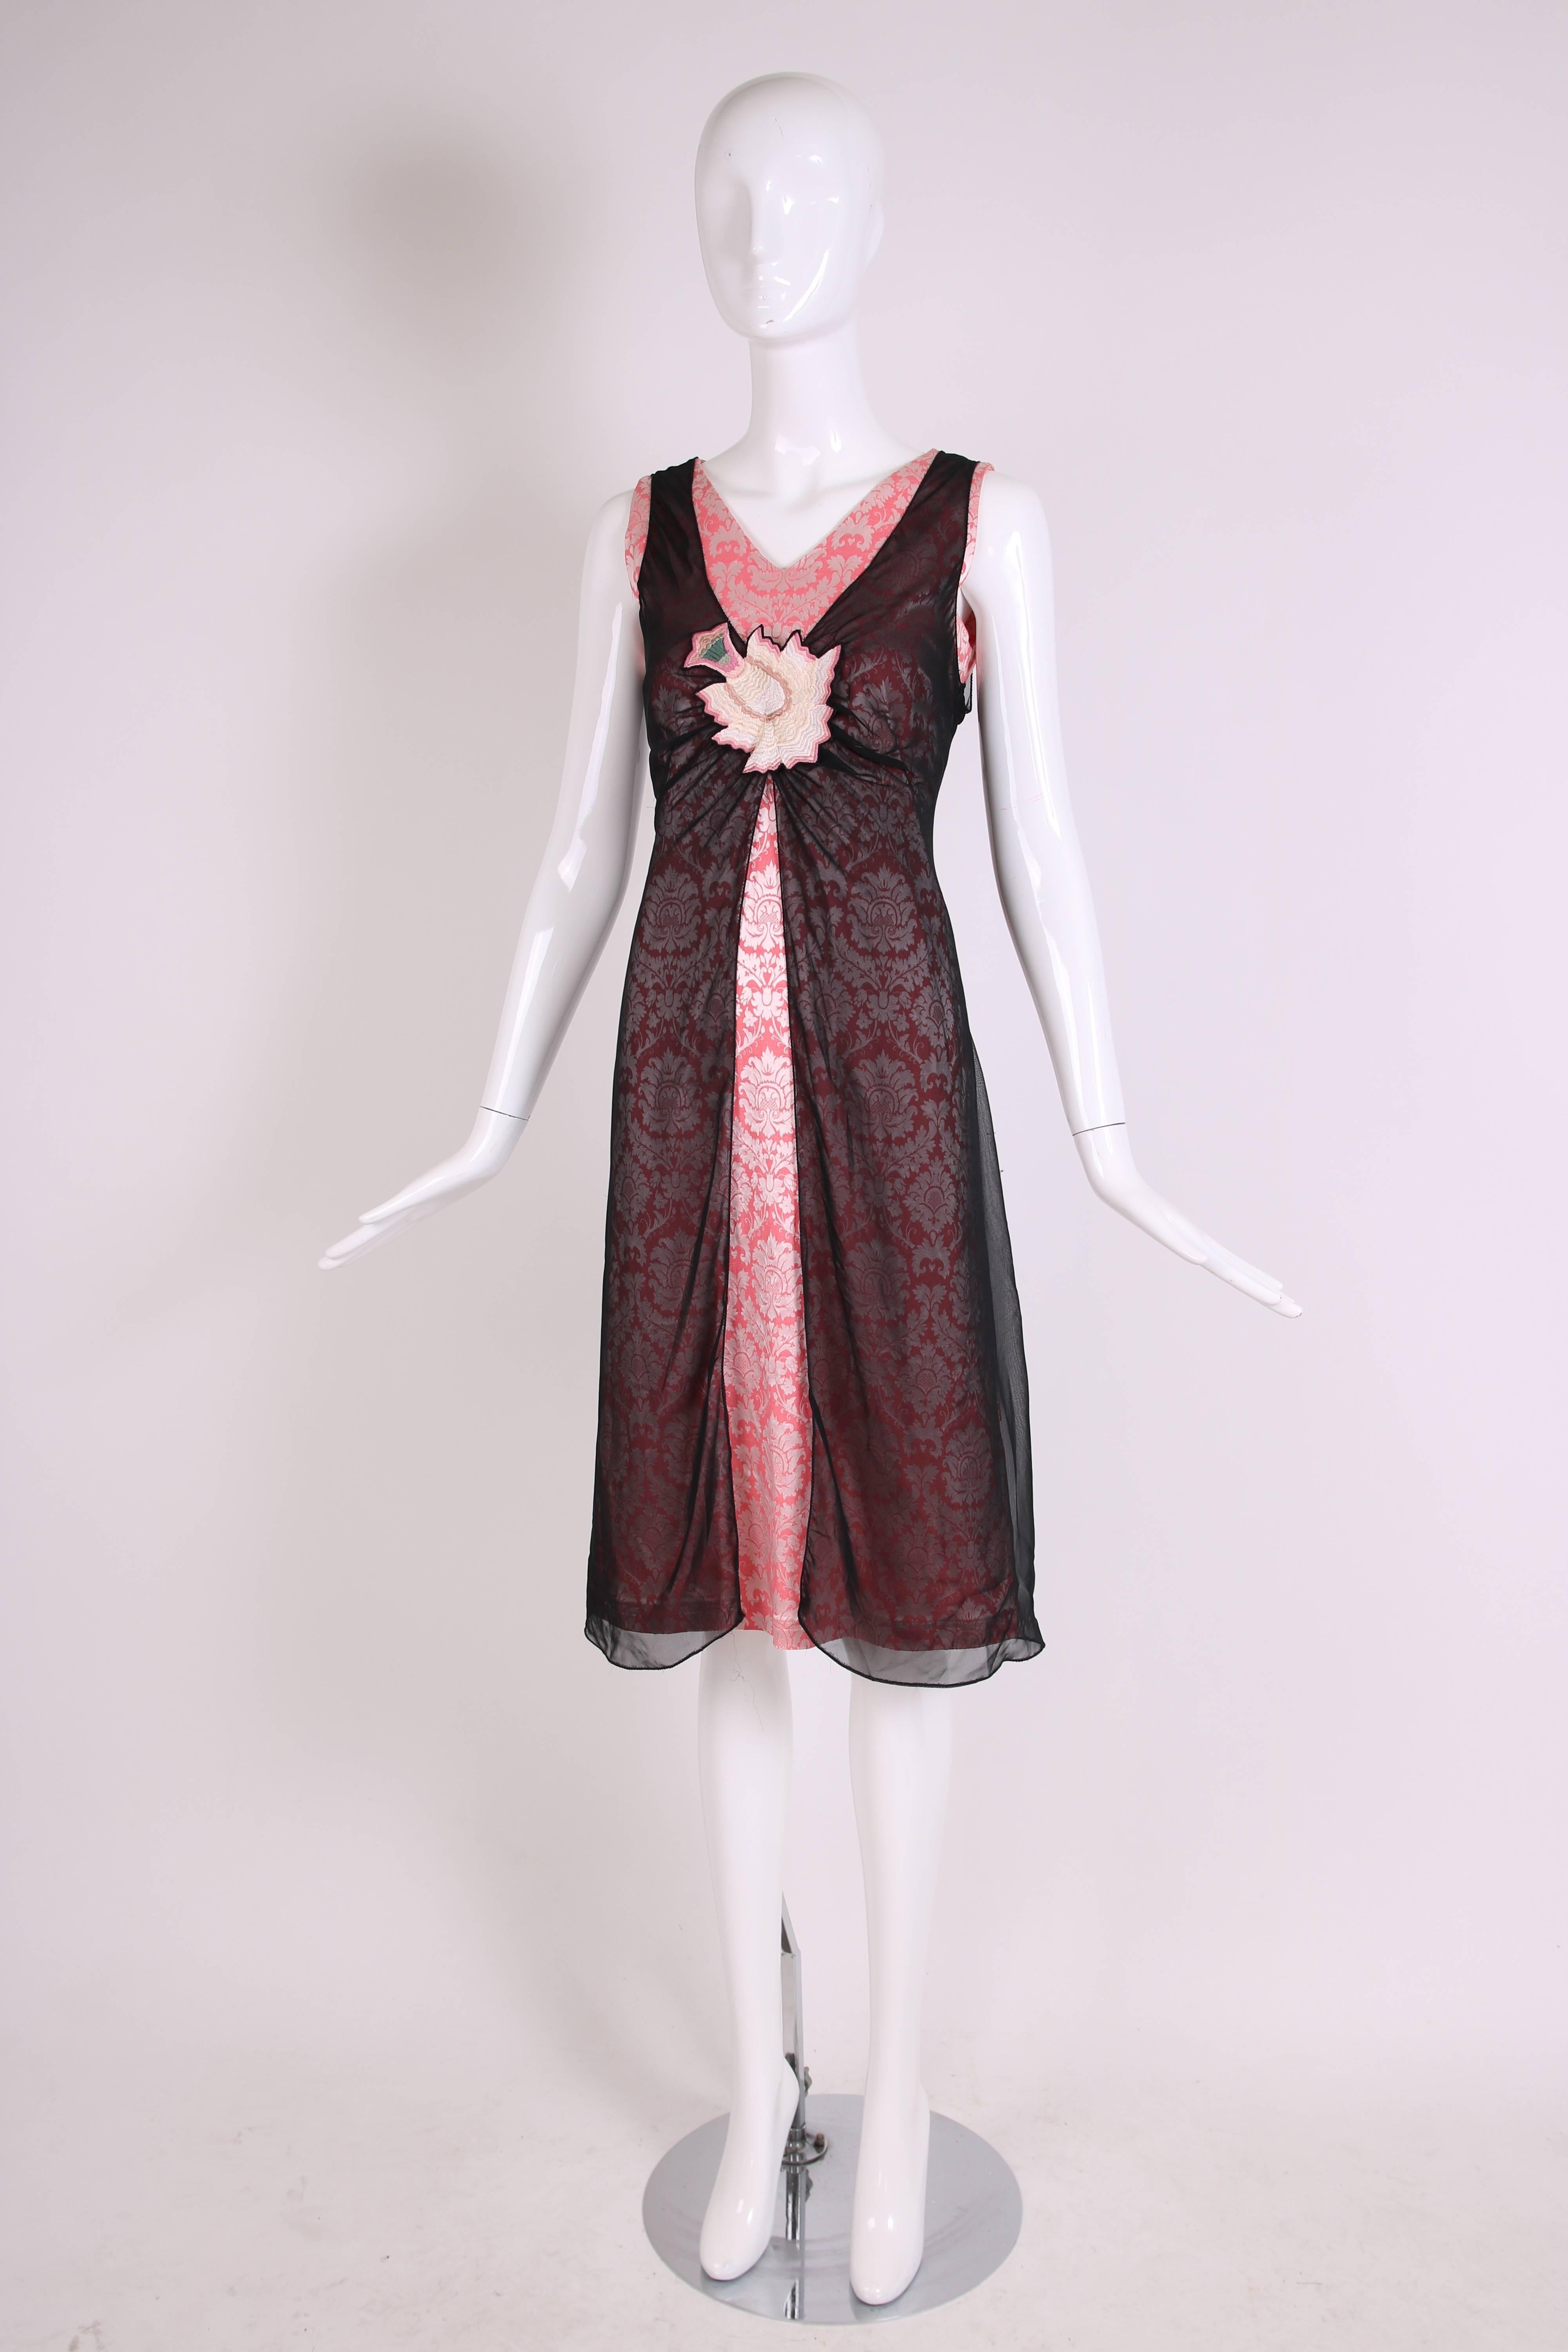 Women's Rare Alexander McQueen Sleeveless Brocade Dress W/Sheer Black Overlay Ca. 1996 For Sale